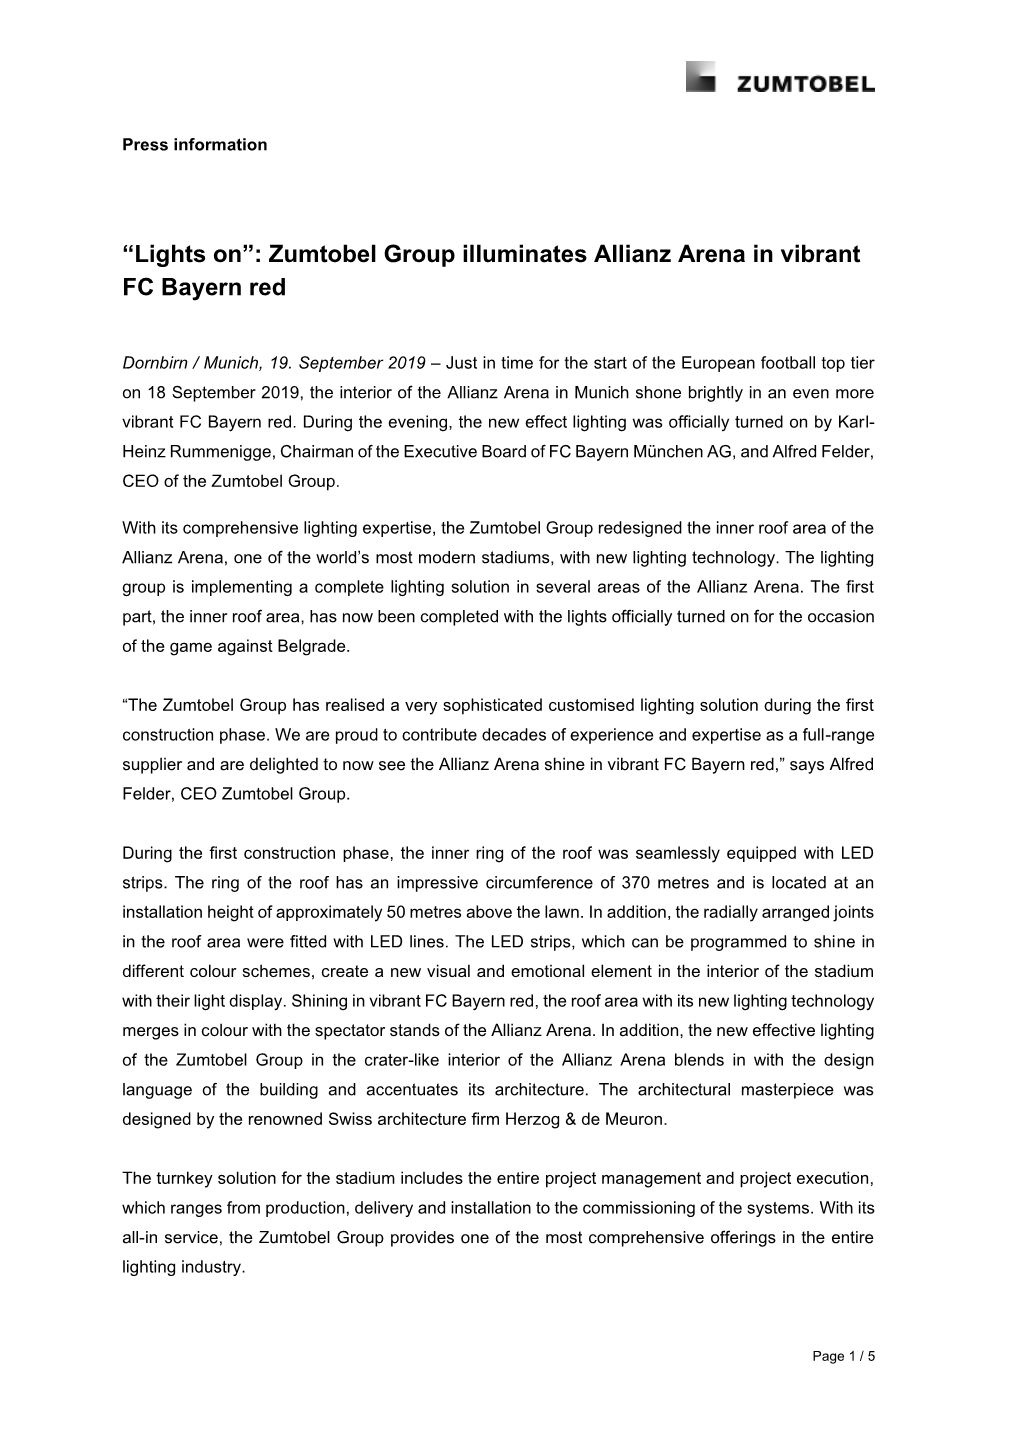 “Lights On”: Zumtobel Group Illuminates Allianz Arena in Vibrant FC Bayern Red